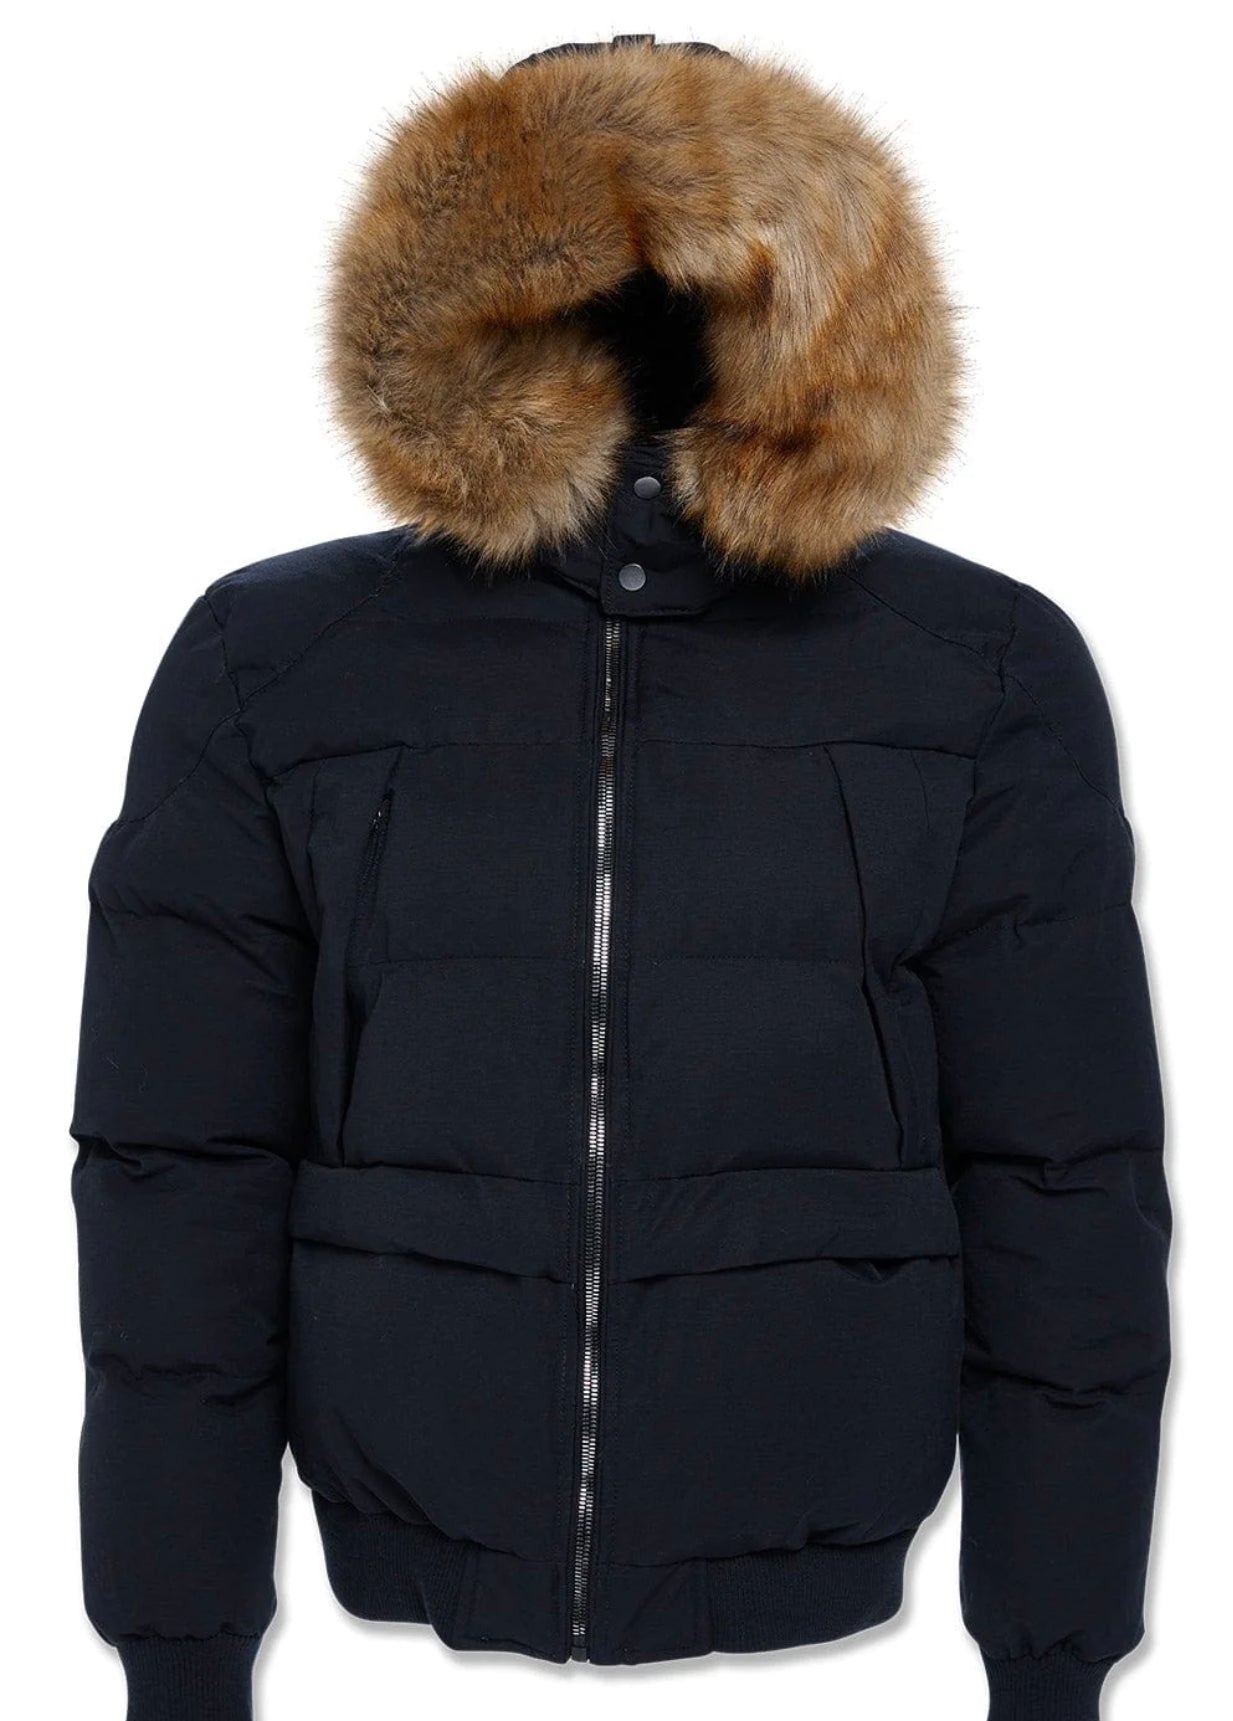 Jordan Craig Hollis  Canvas Puffer jacket w fur hood Black 91615 91541